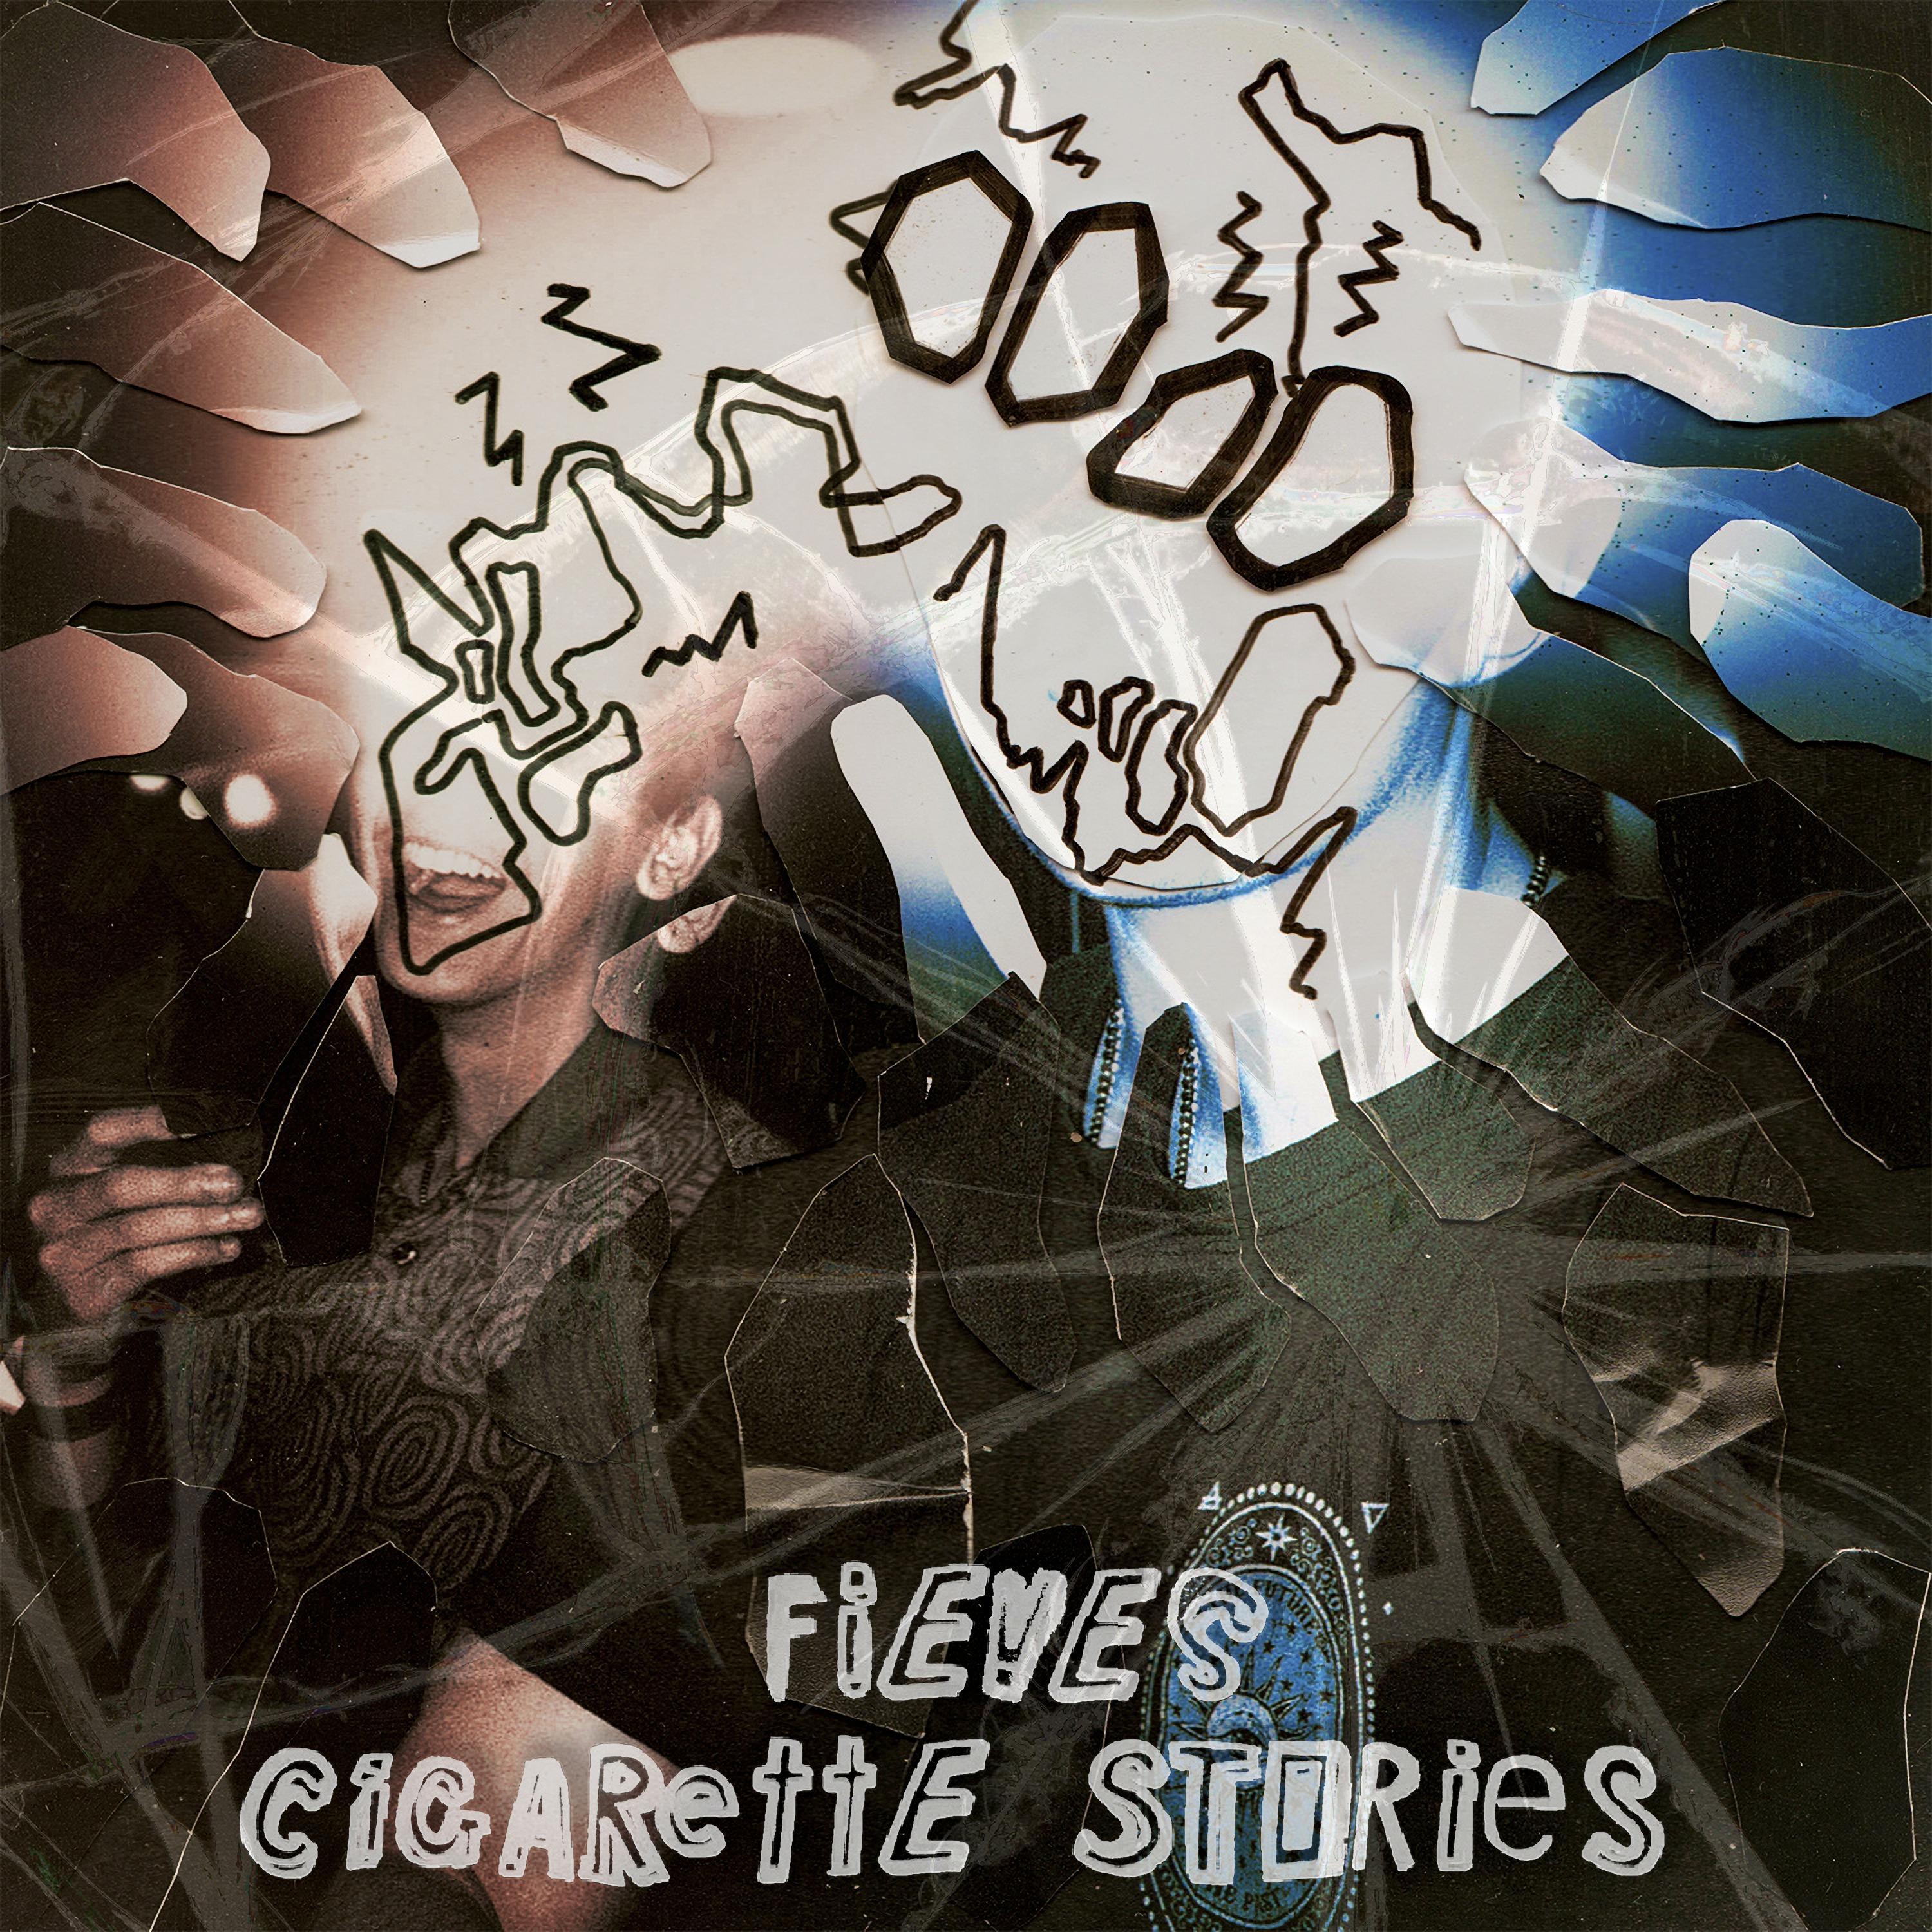 Fieves - Cigarette Stories